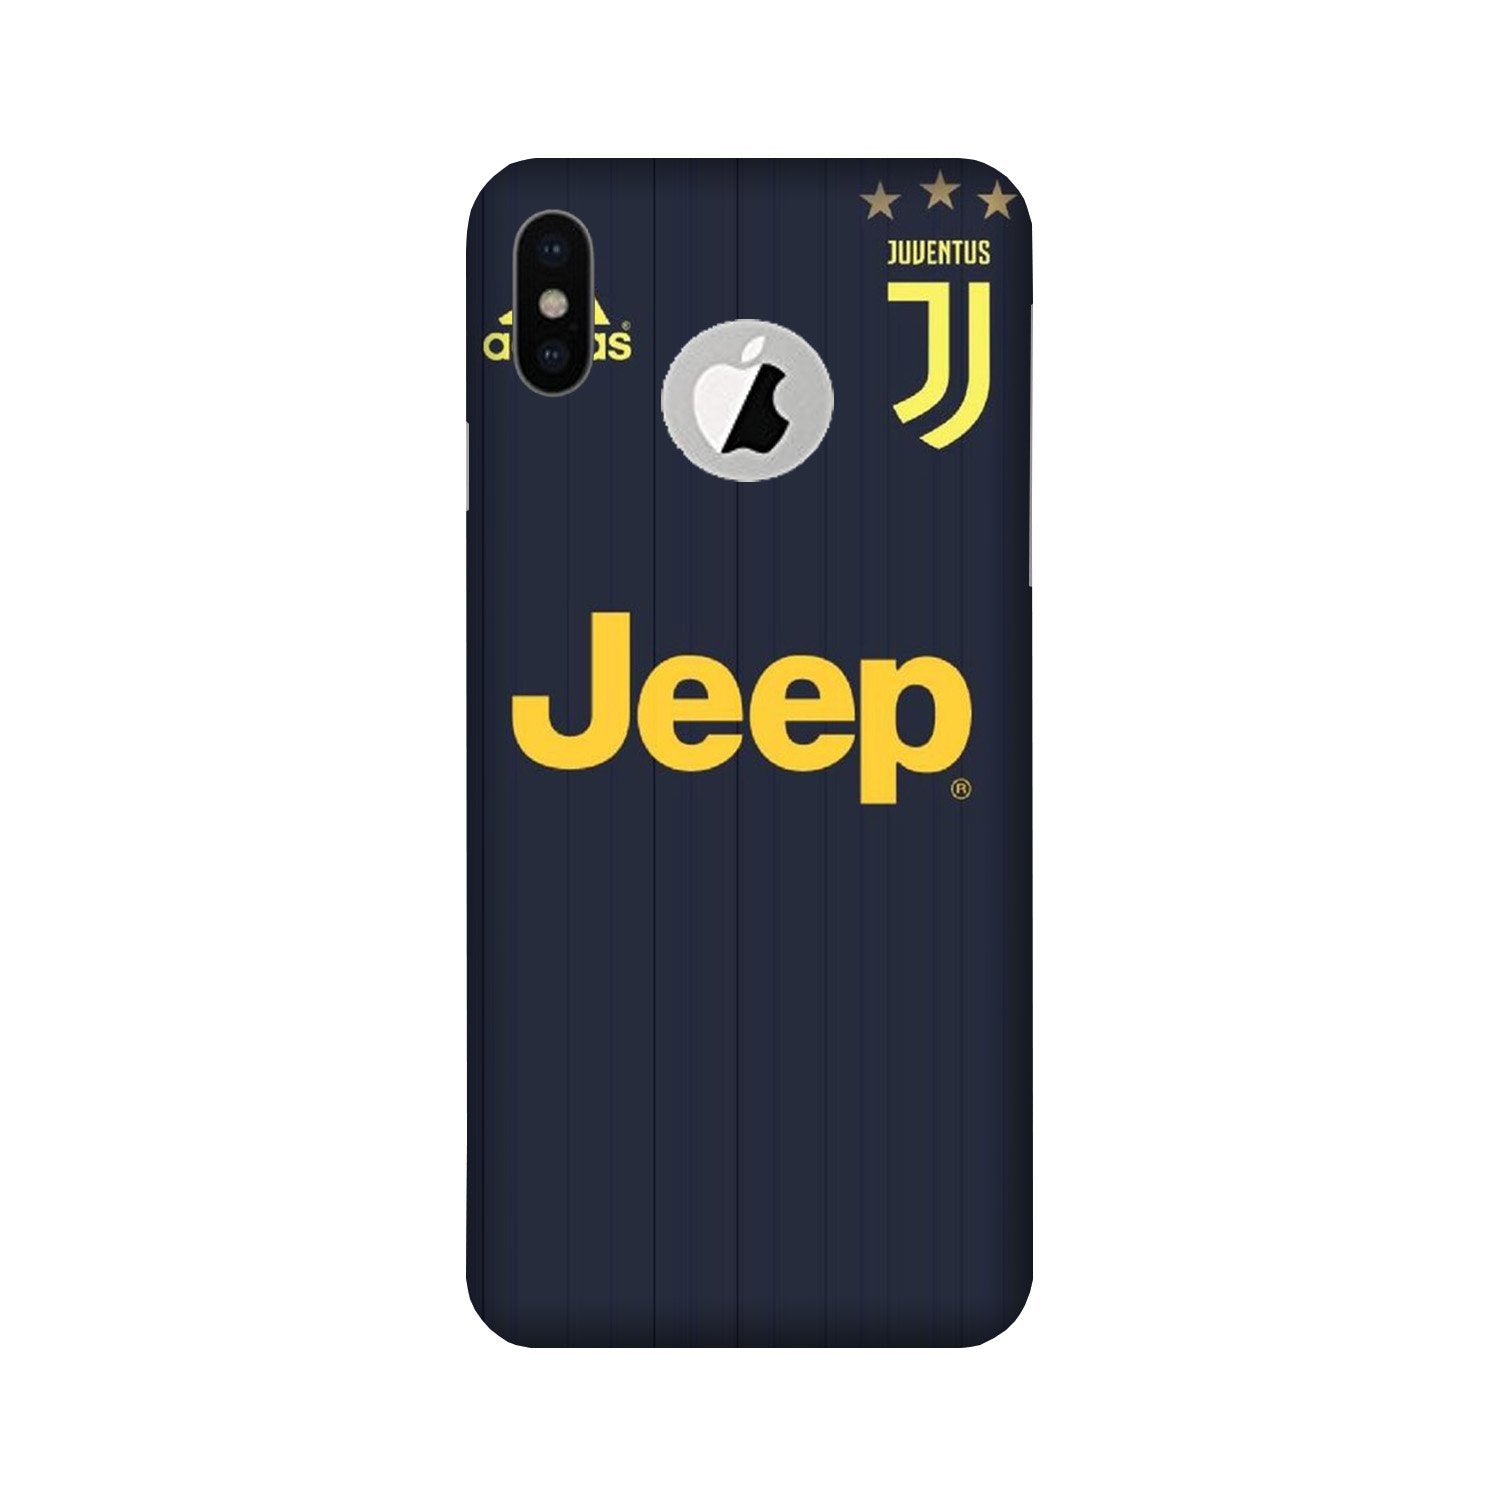 Jeep Juventus Case for iPhone Xs logo cut (Design - 161)